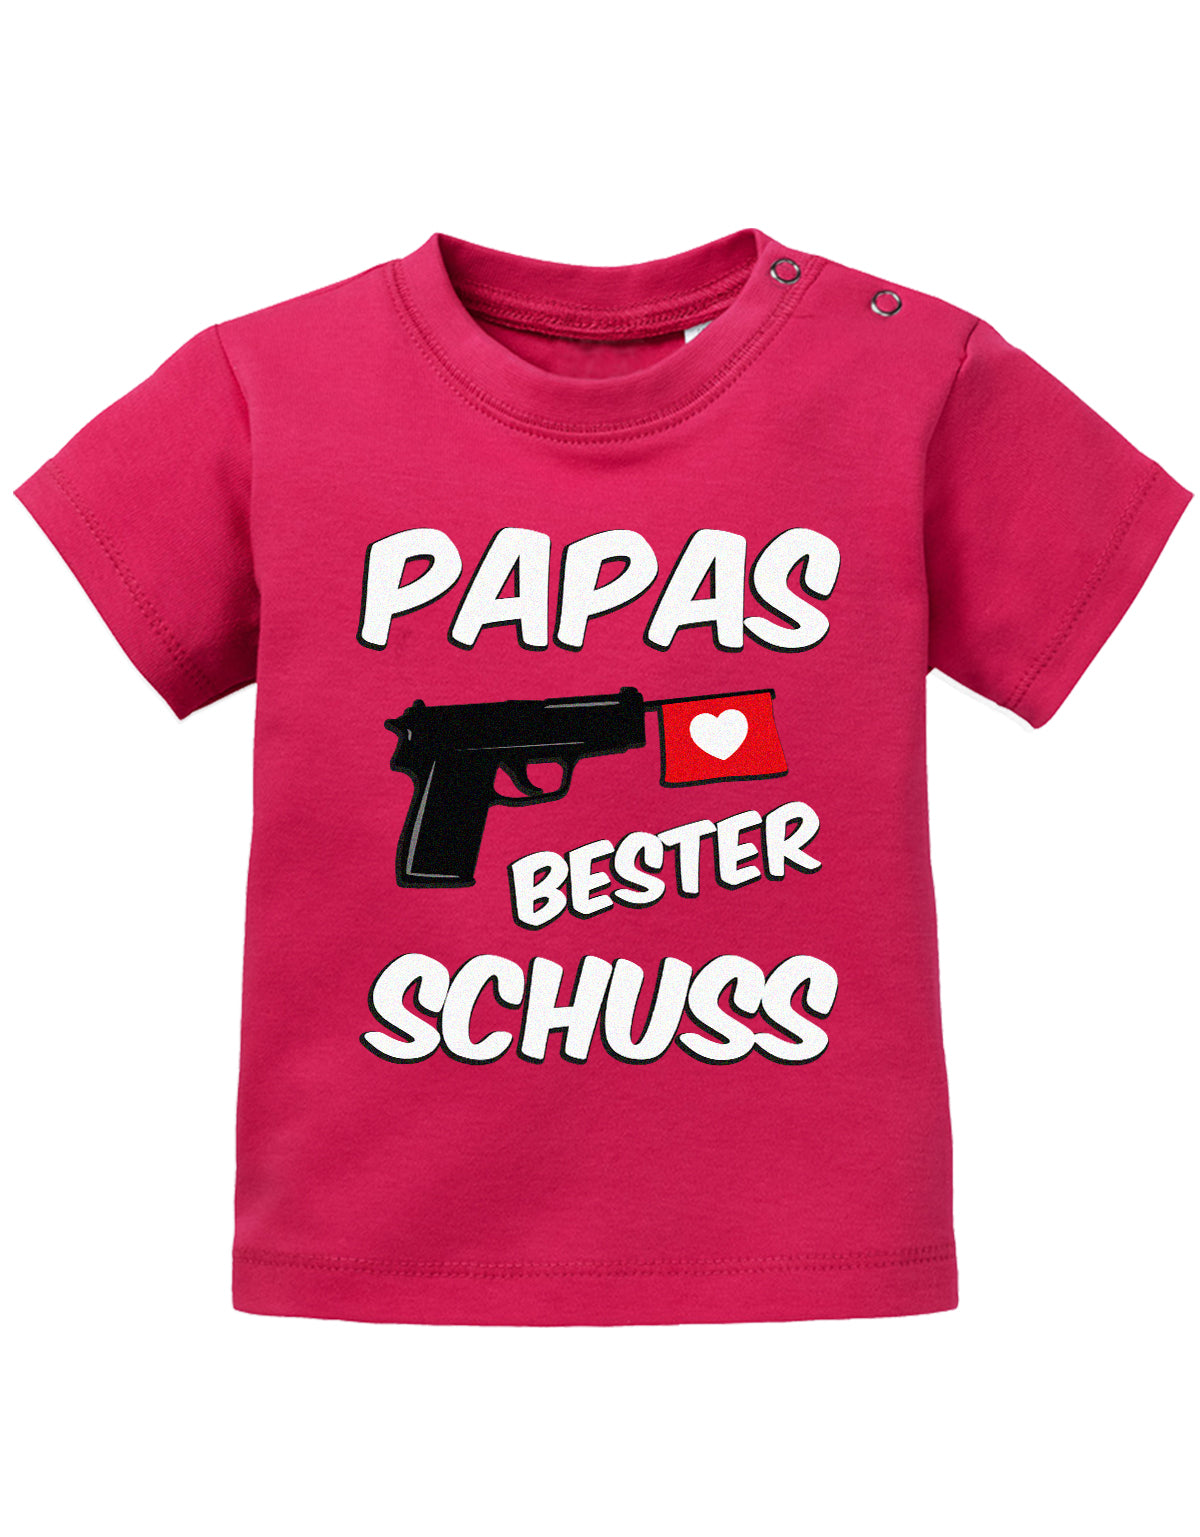 Lustiges süßes Sprüche Baby Shirt Papas bester Schuss Sorbet